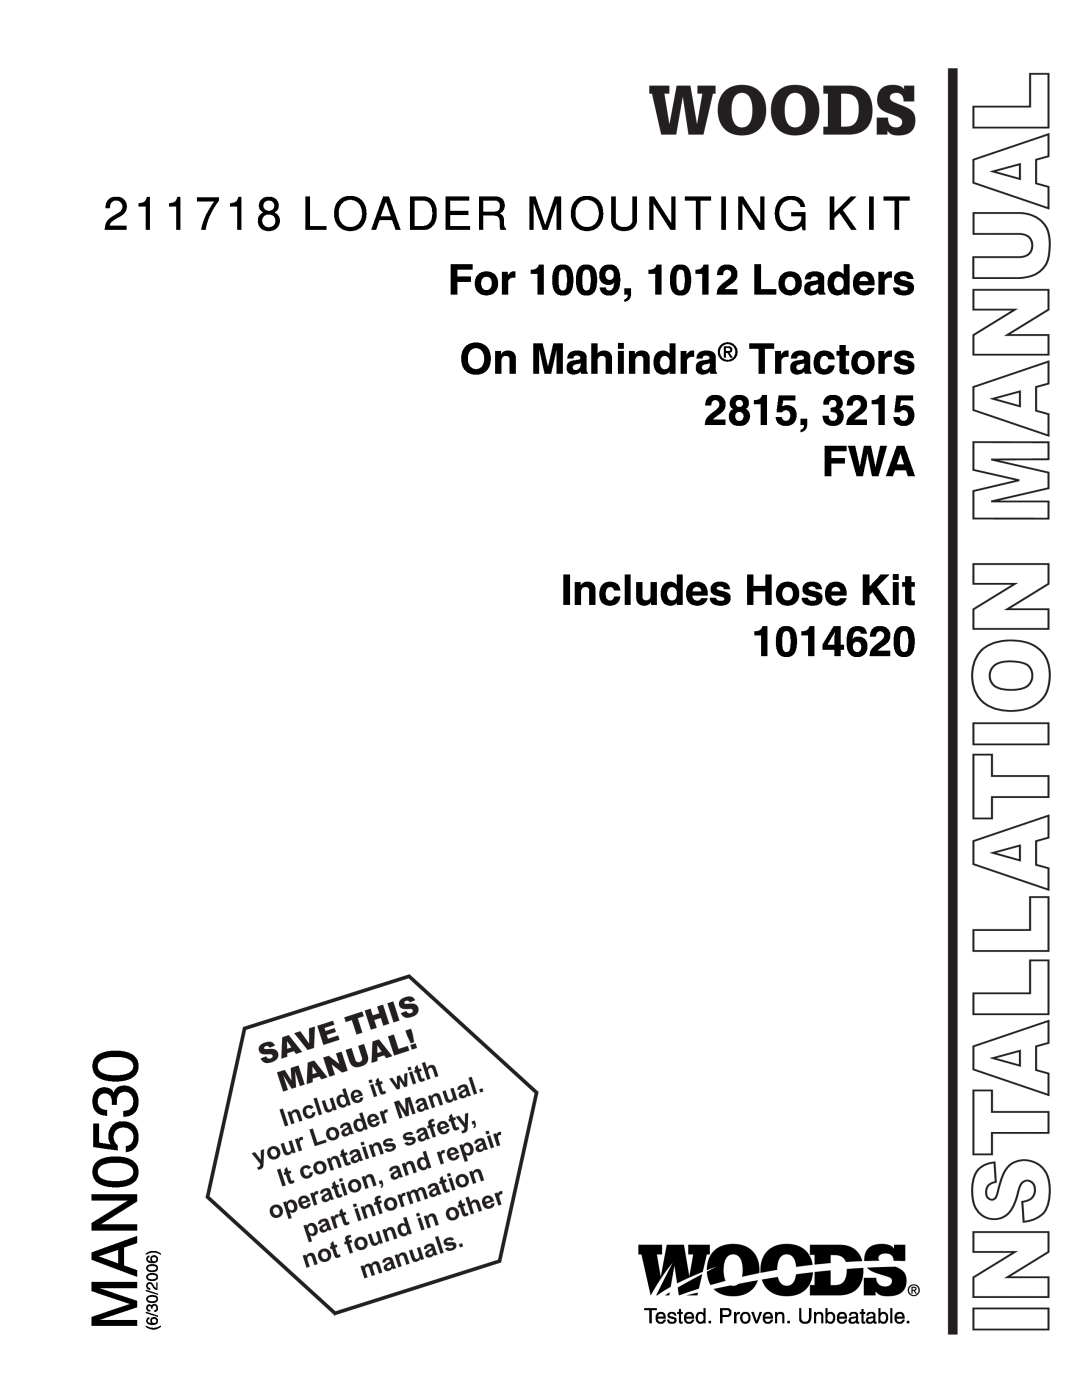 Woods Equipment 211718 installation manual MAN0530, Loader Mounting Kit, For 1009, 1012 Loaders, Includes Hose Kit, Save 